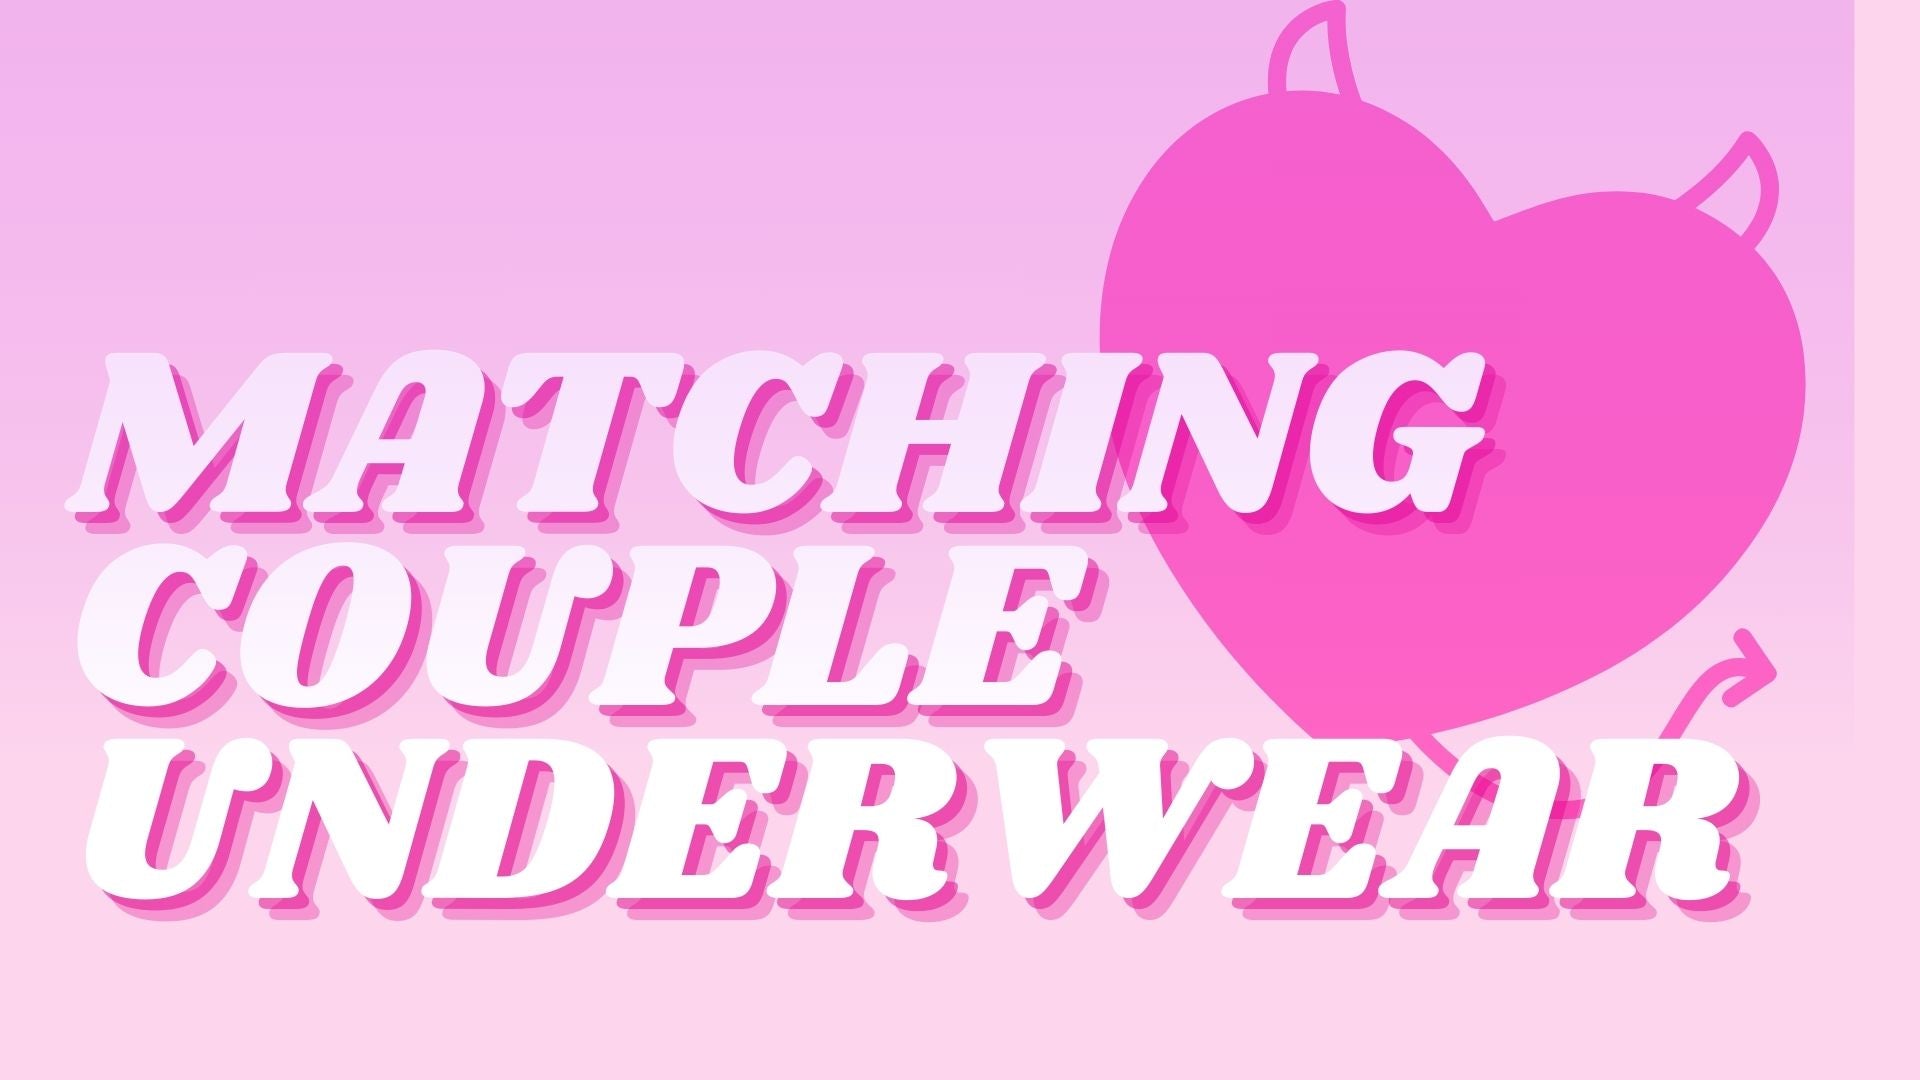 Cheeky Briefs Panties Underwear Comfortable Plaid Lesbian Flag Colors –  SunrayStoreCreations